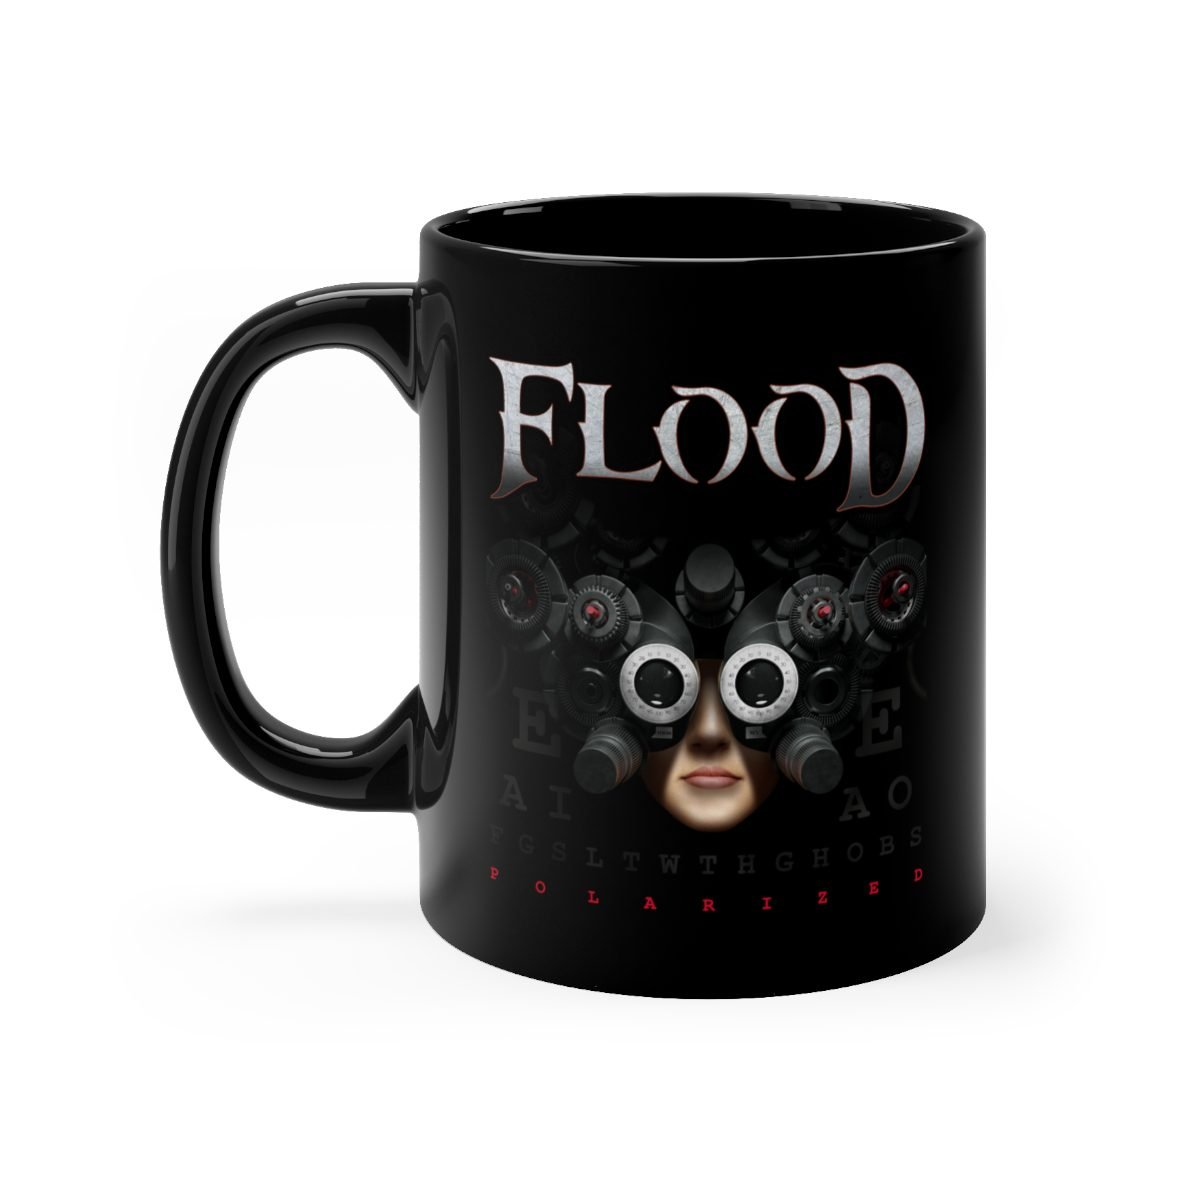 FLOOD – Polarized Black mug 11oz